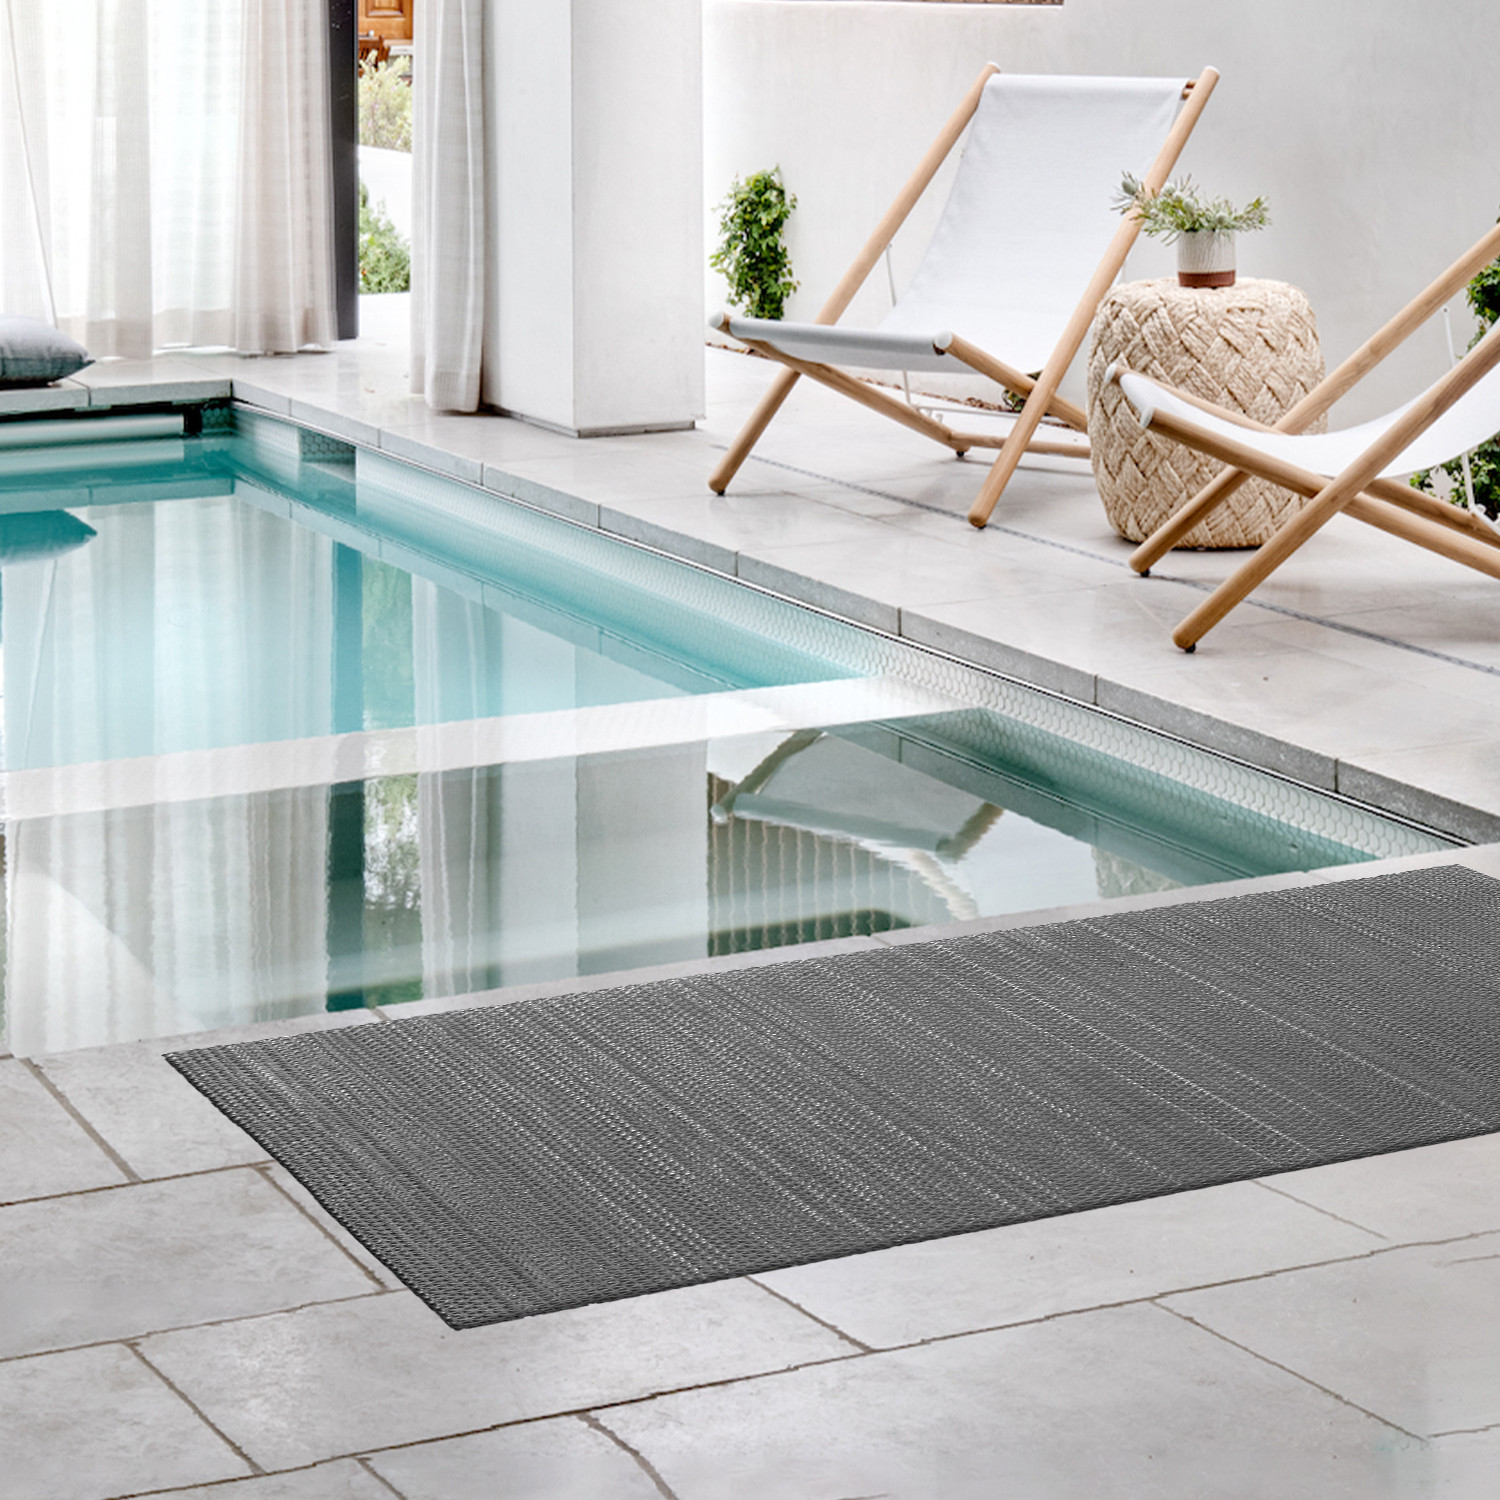 Kuber Industries Rubber Waterproof Anti-Skid Swimming Pool Mat|Shower Mat|Rainmat For Entrance Area,Bathroom,2 x 4 Feet (Gray)